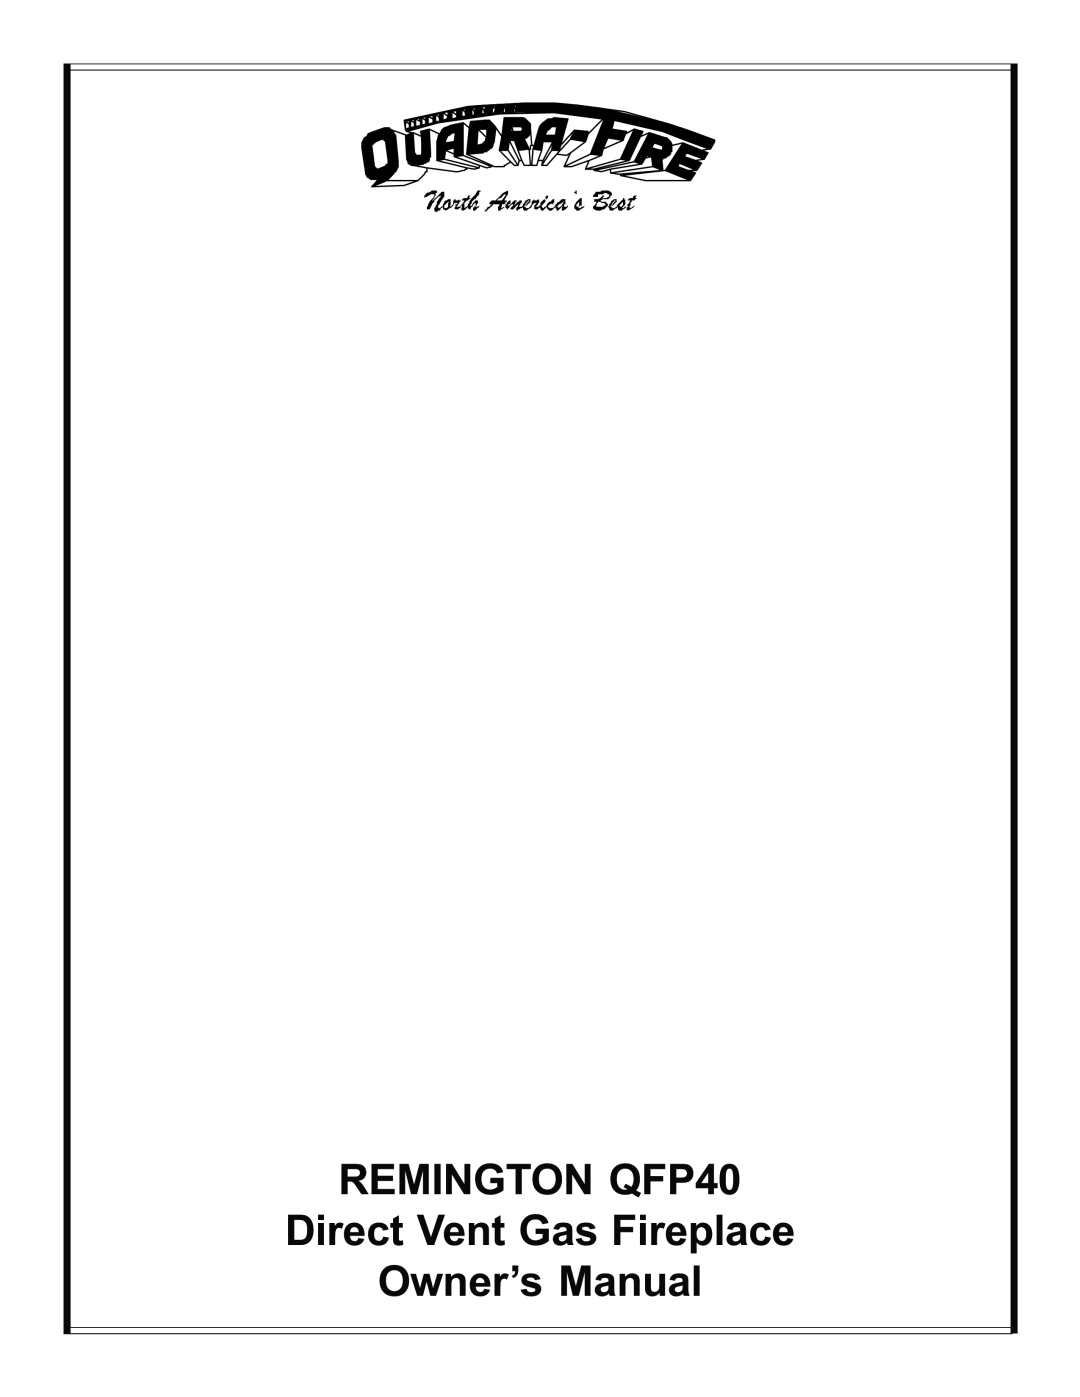 Remington manual REMINGTON QFP40 Direct Vent Gas Fireplace 